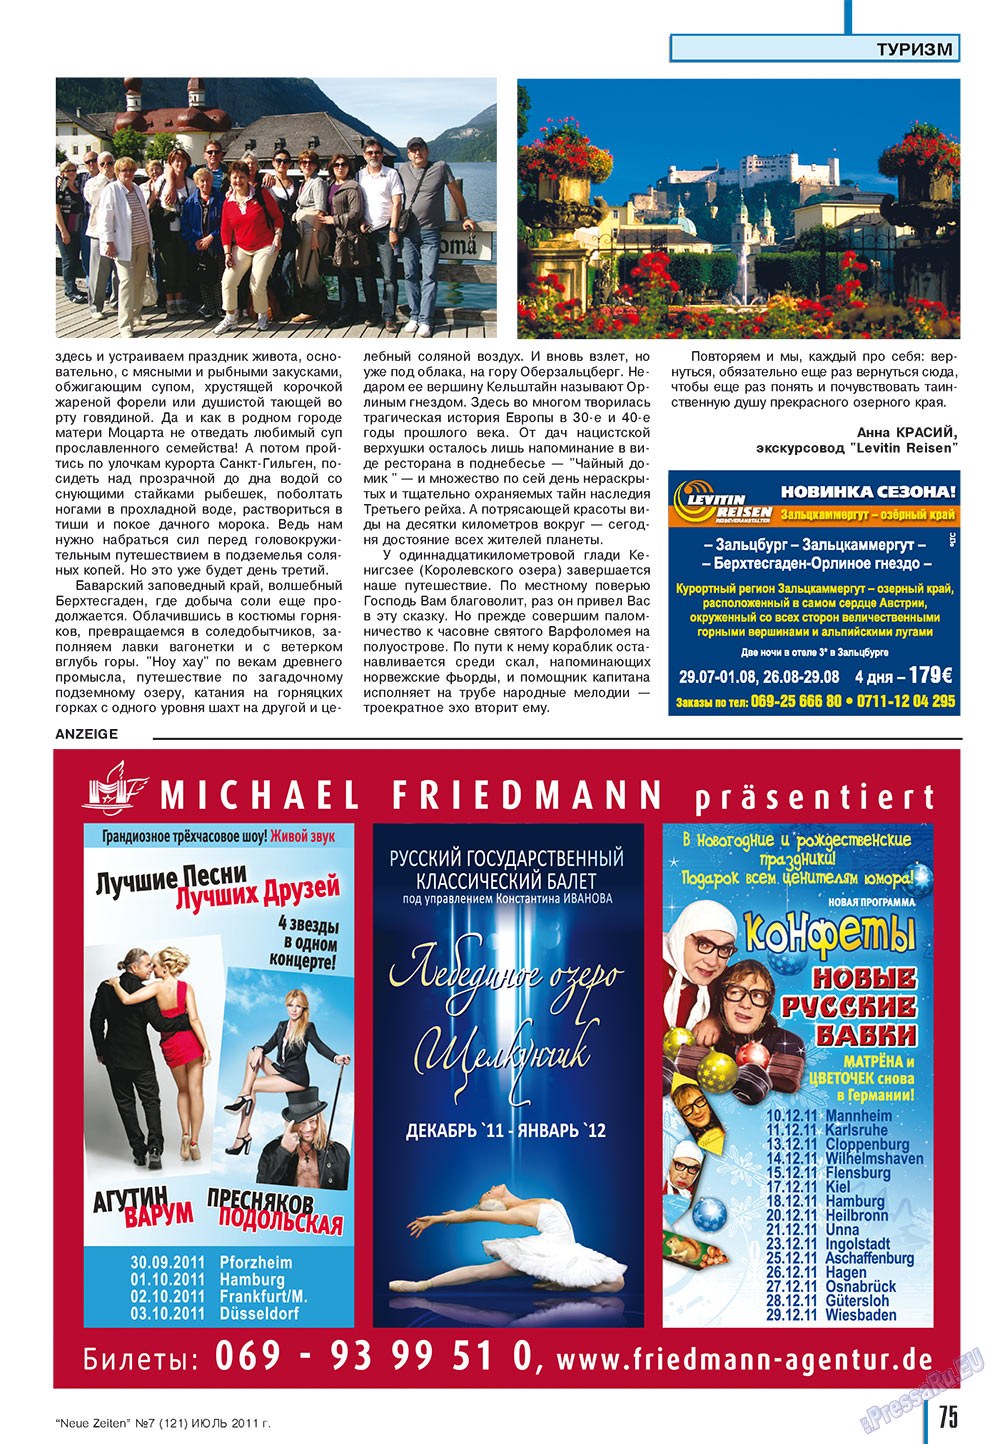 Neue Zeiten (журнал). 2011 год, номер 7, стр. 75